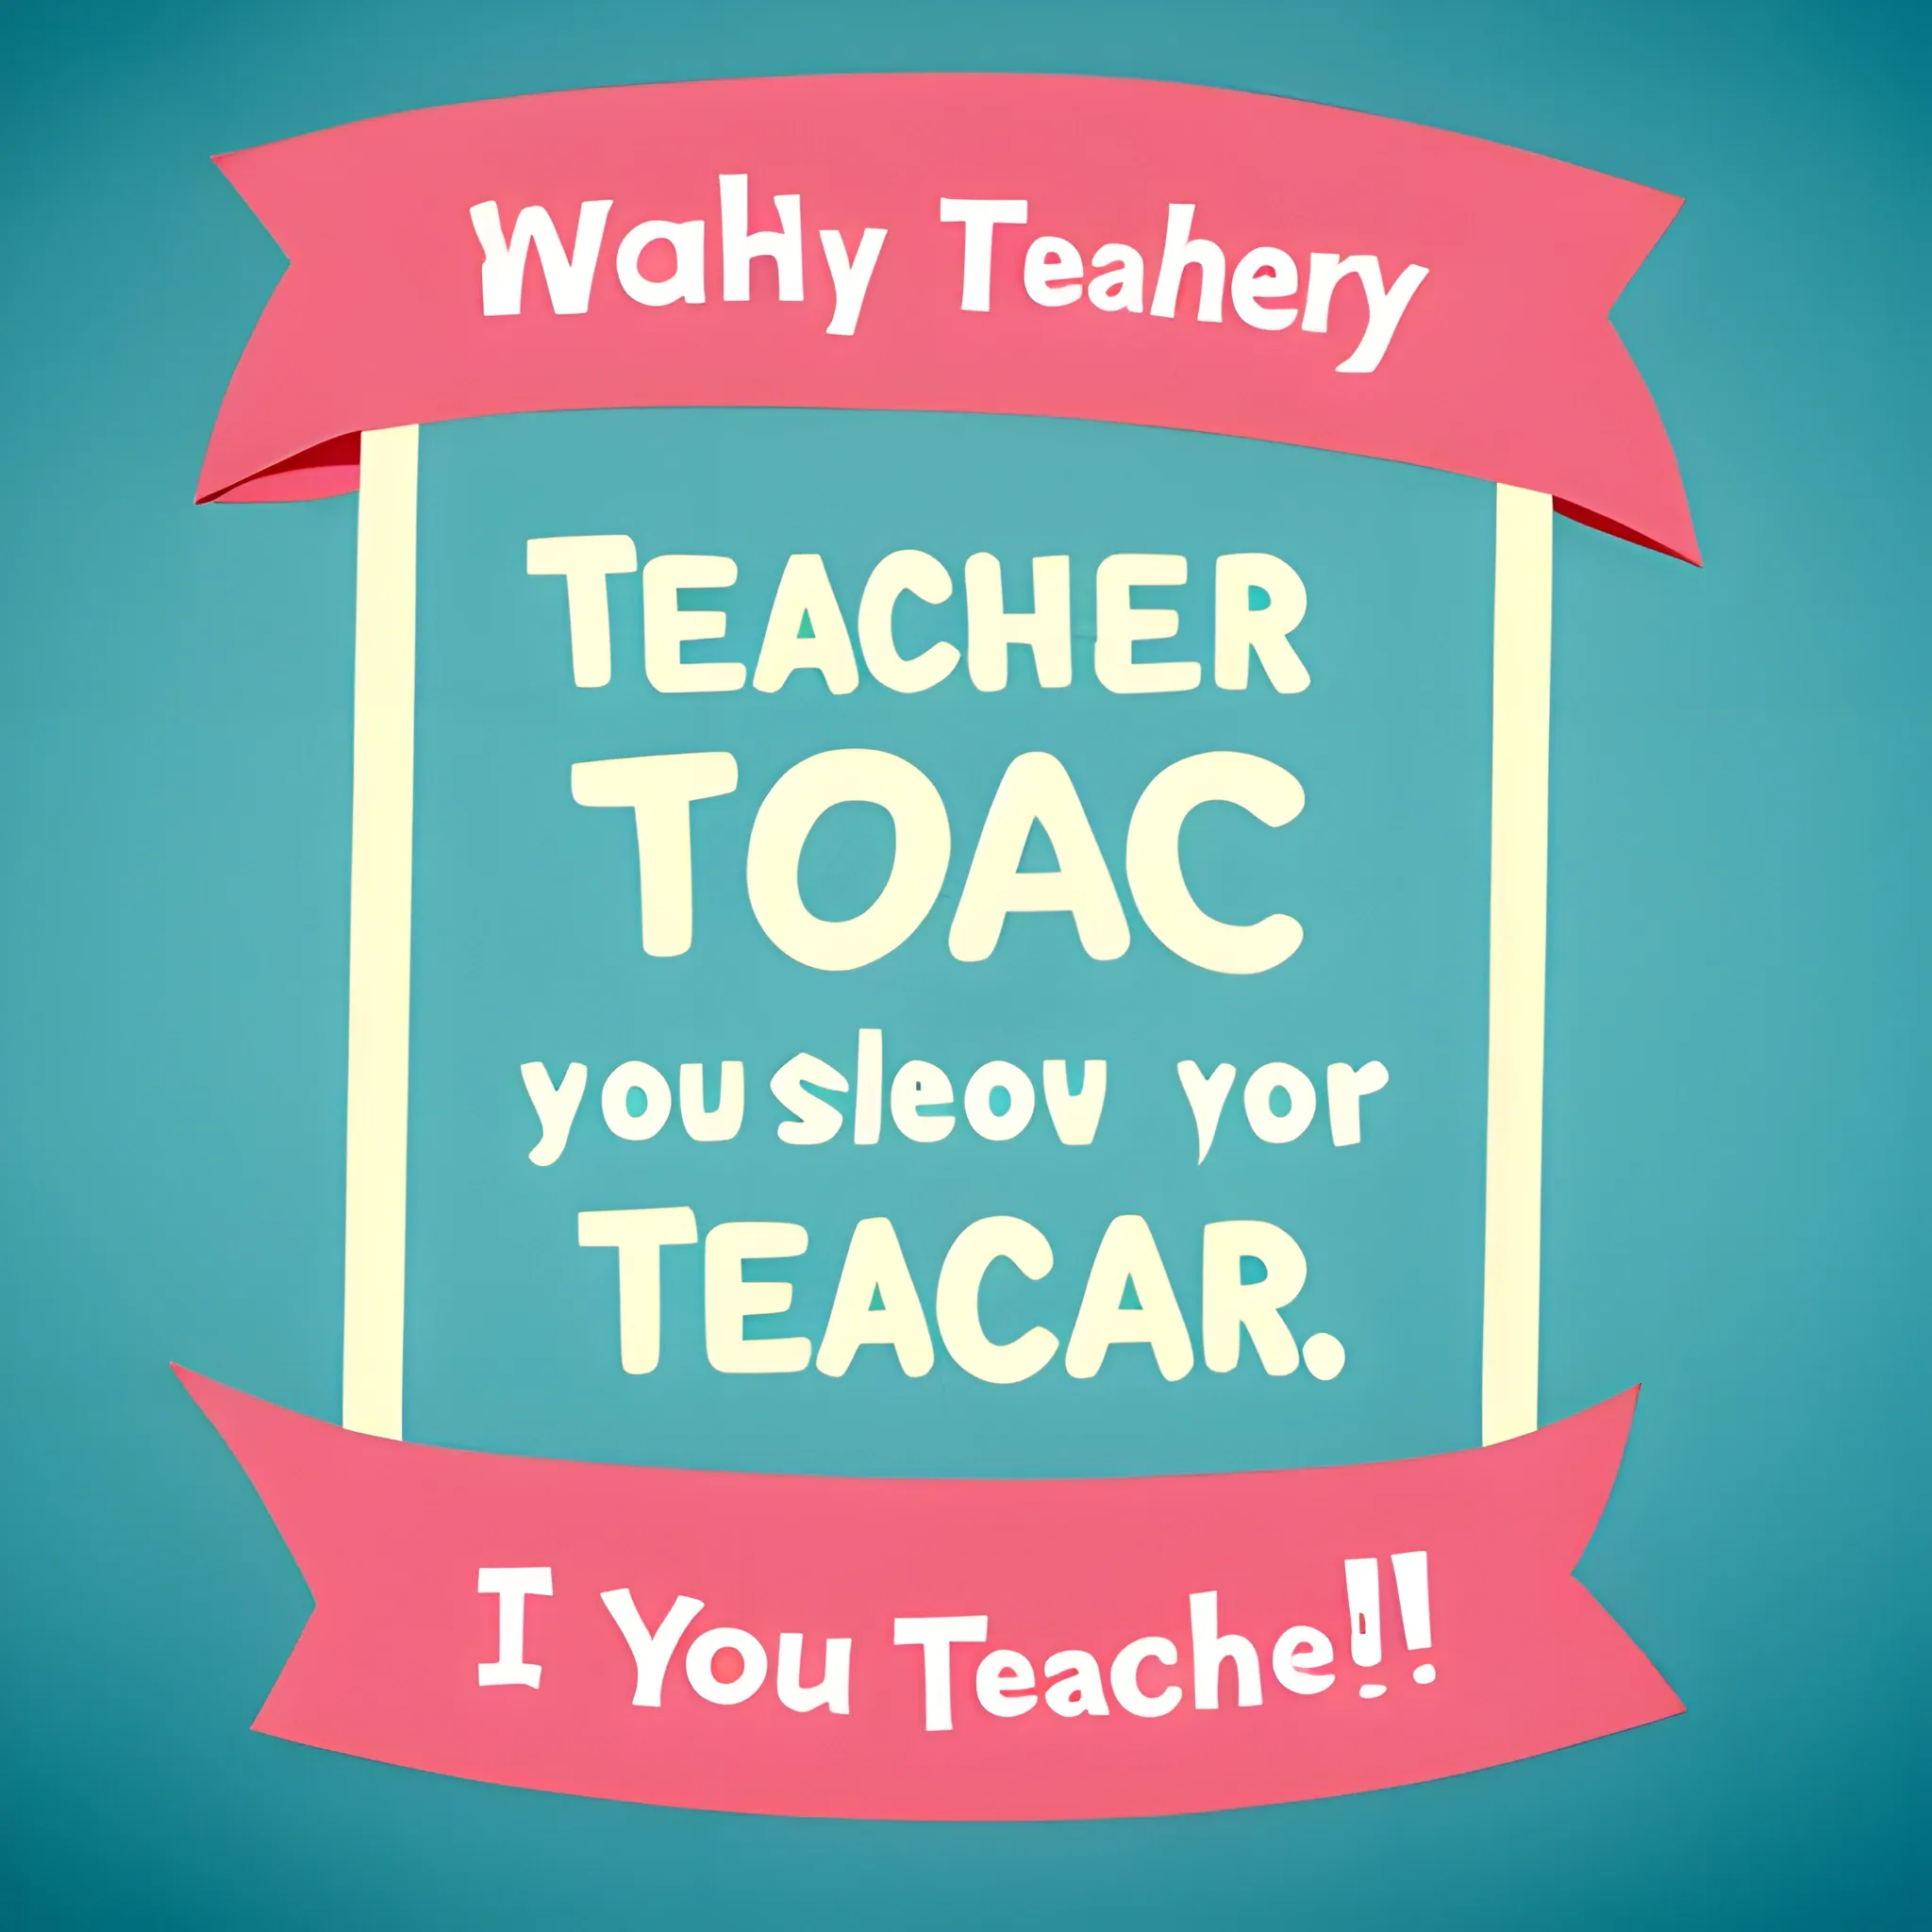 Teachers' day wish quote to wish all the teachers